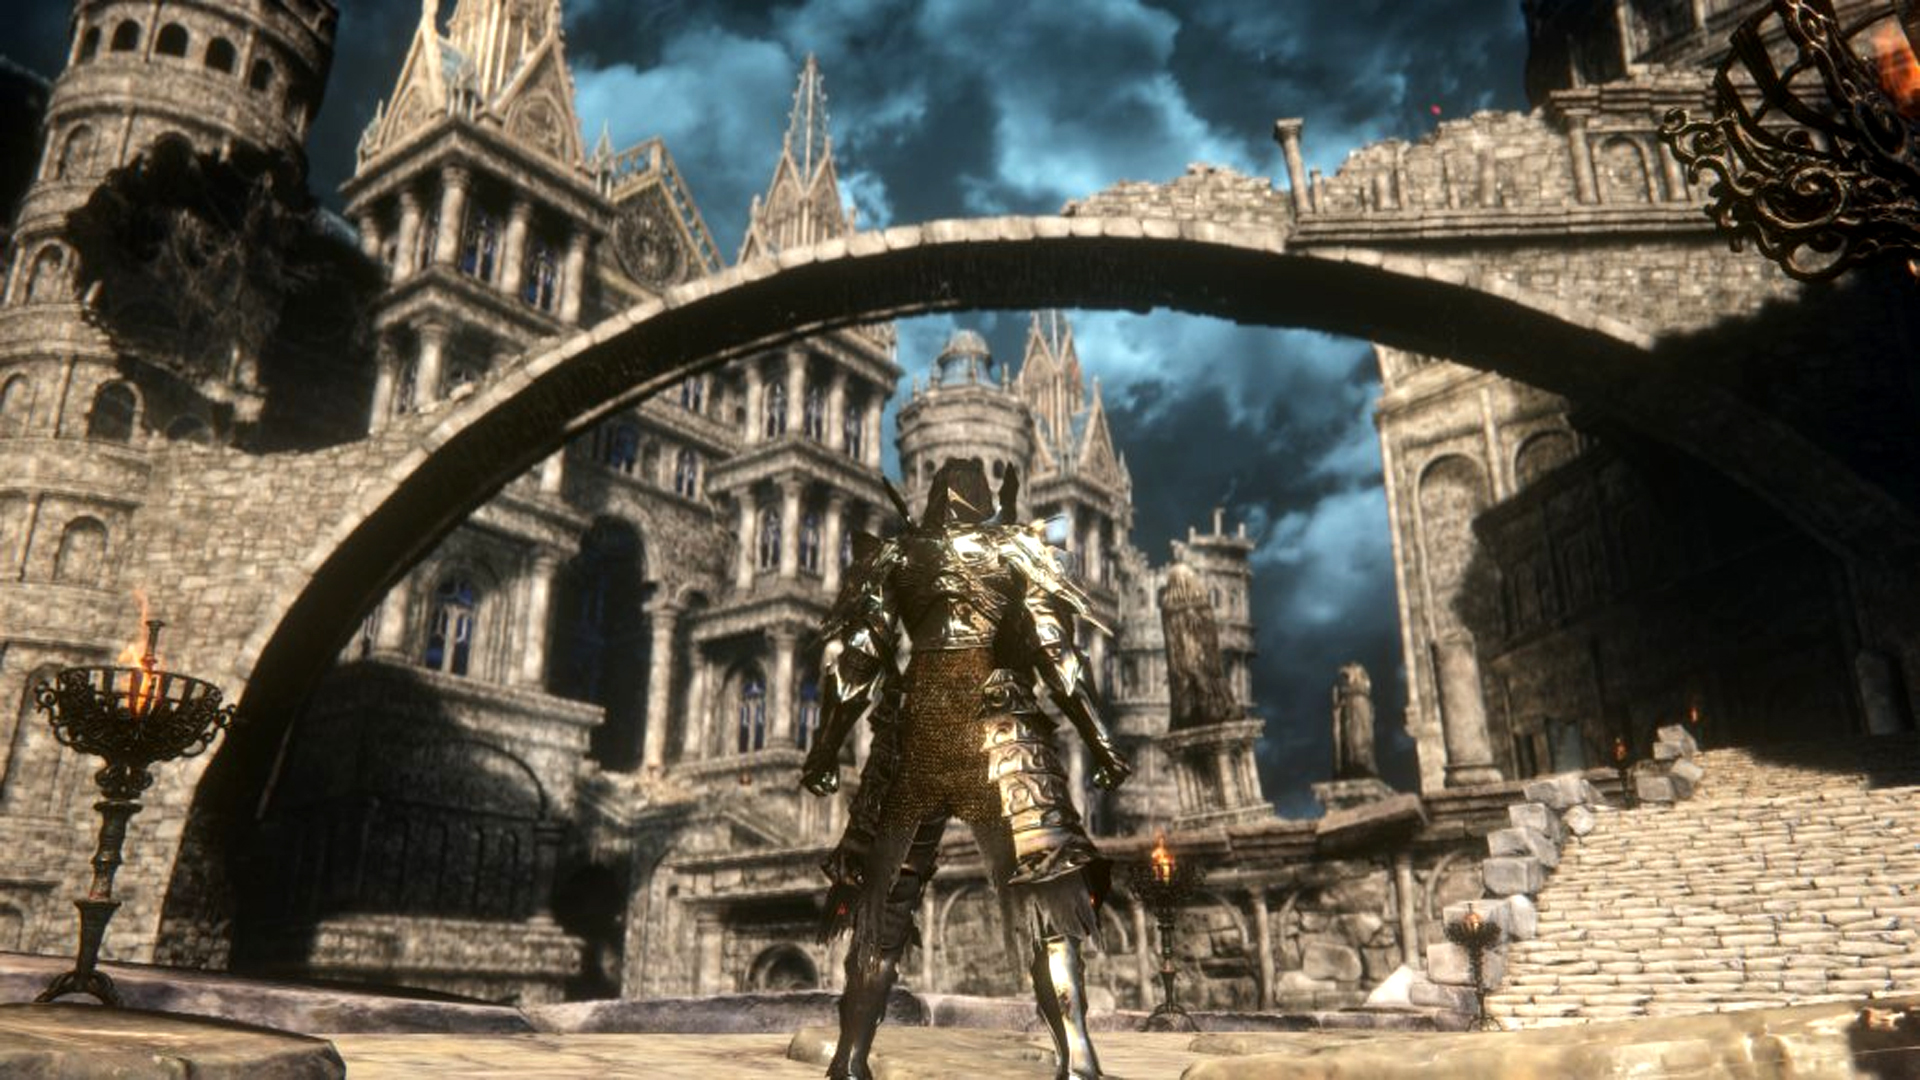 Dark Souls 3 overhaul mod Archthrones is getting a demo